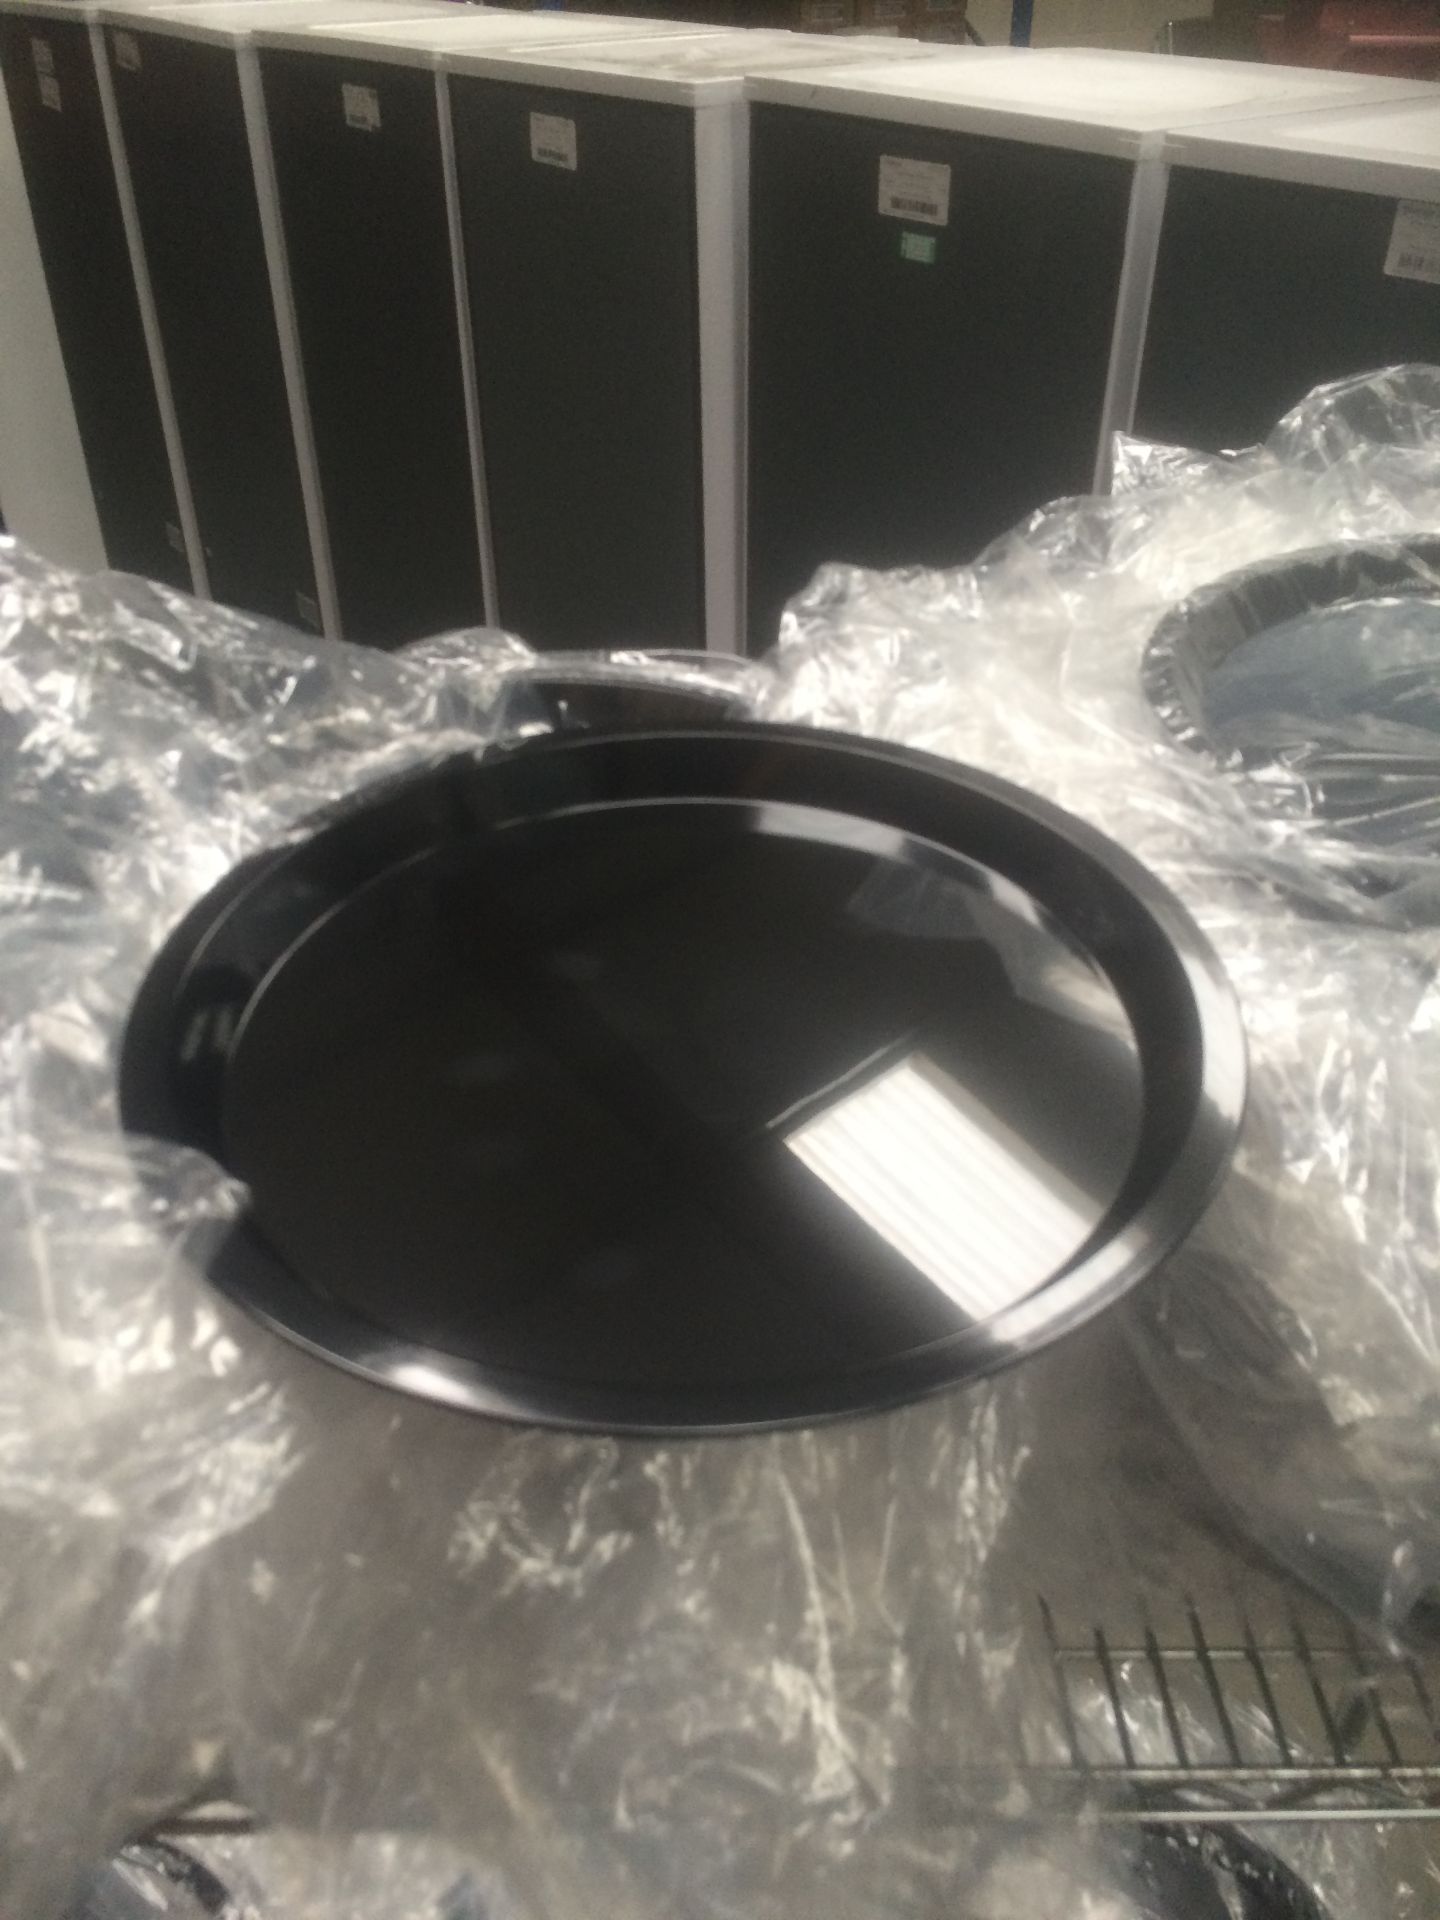 50 new black round waiter service trays 325mm diameter